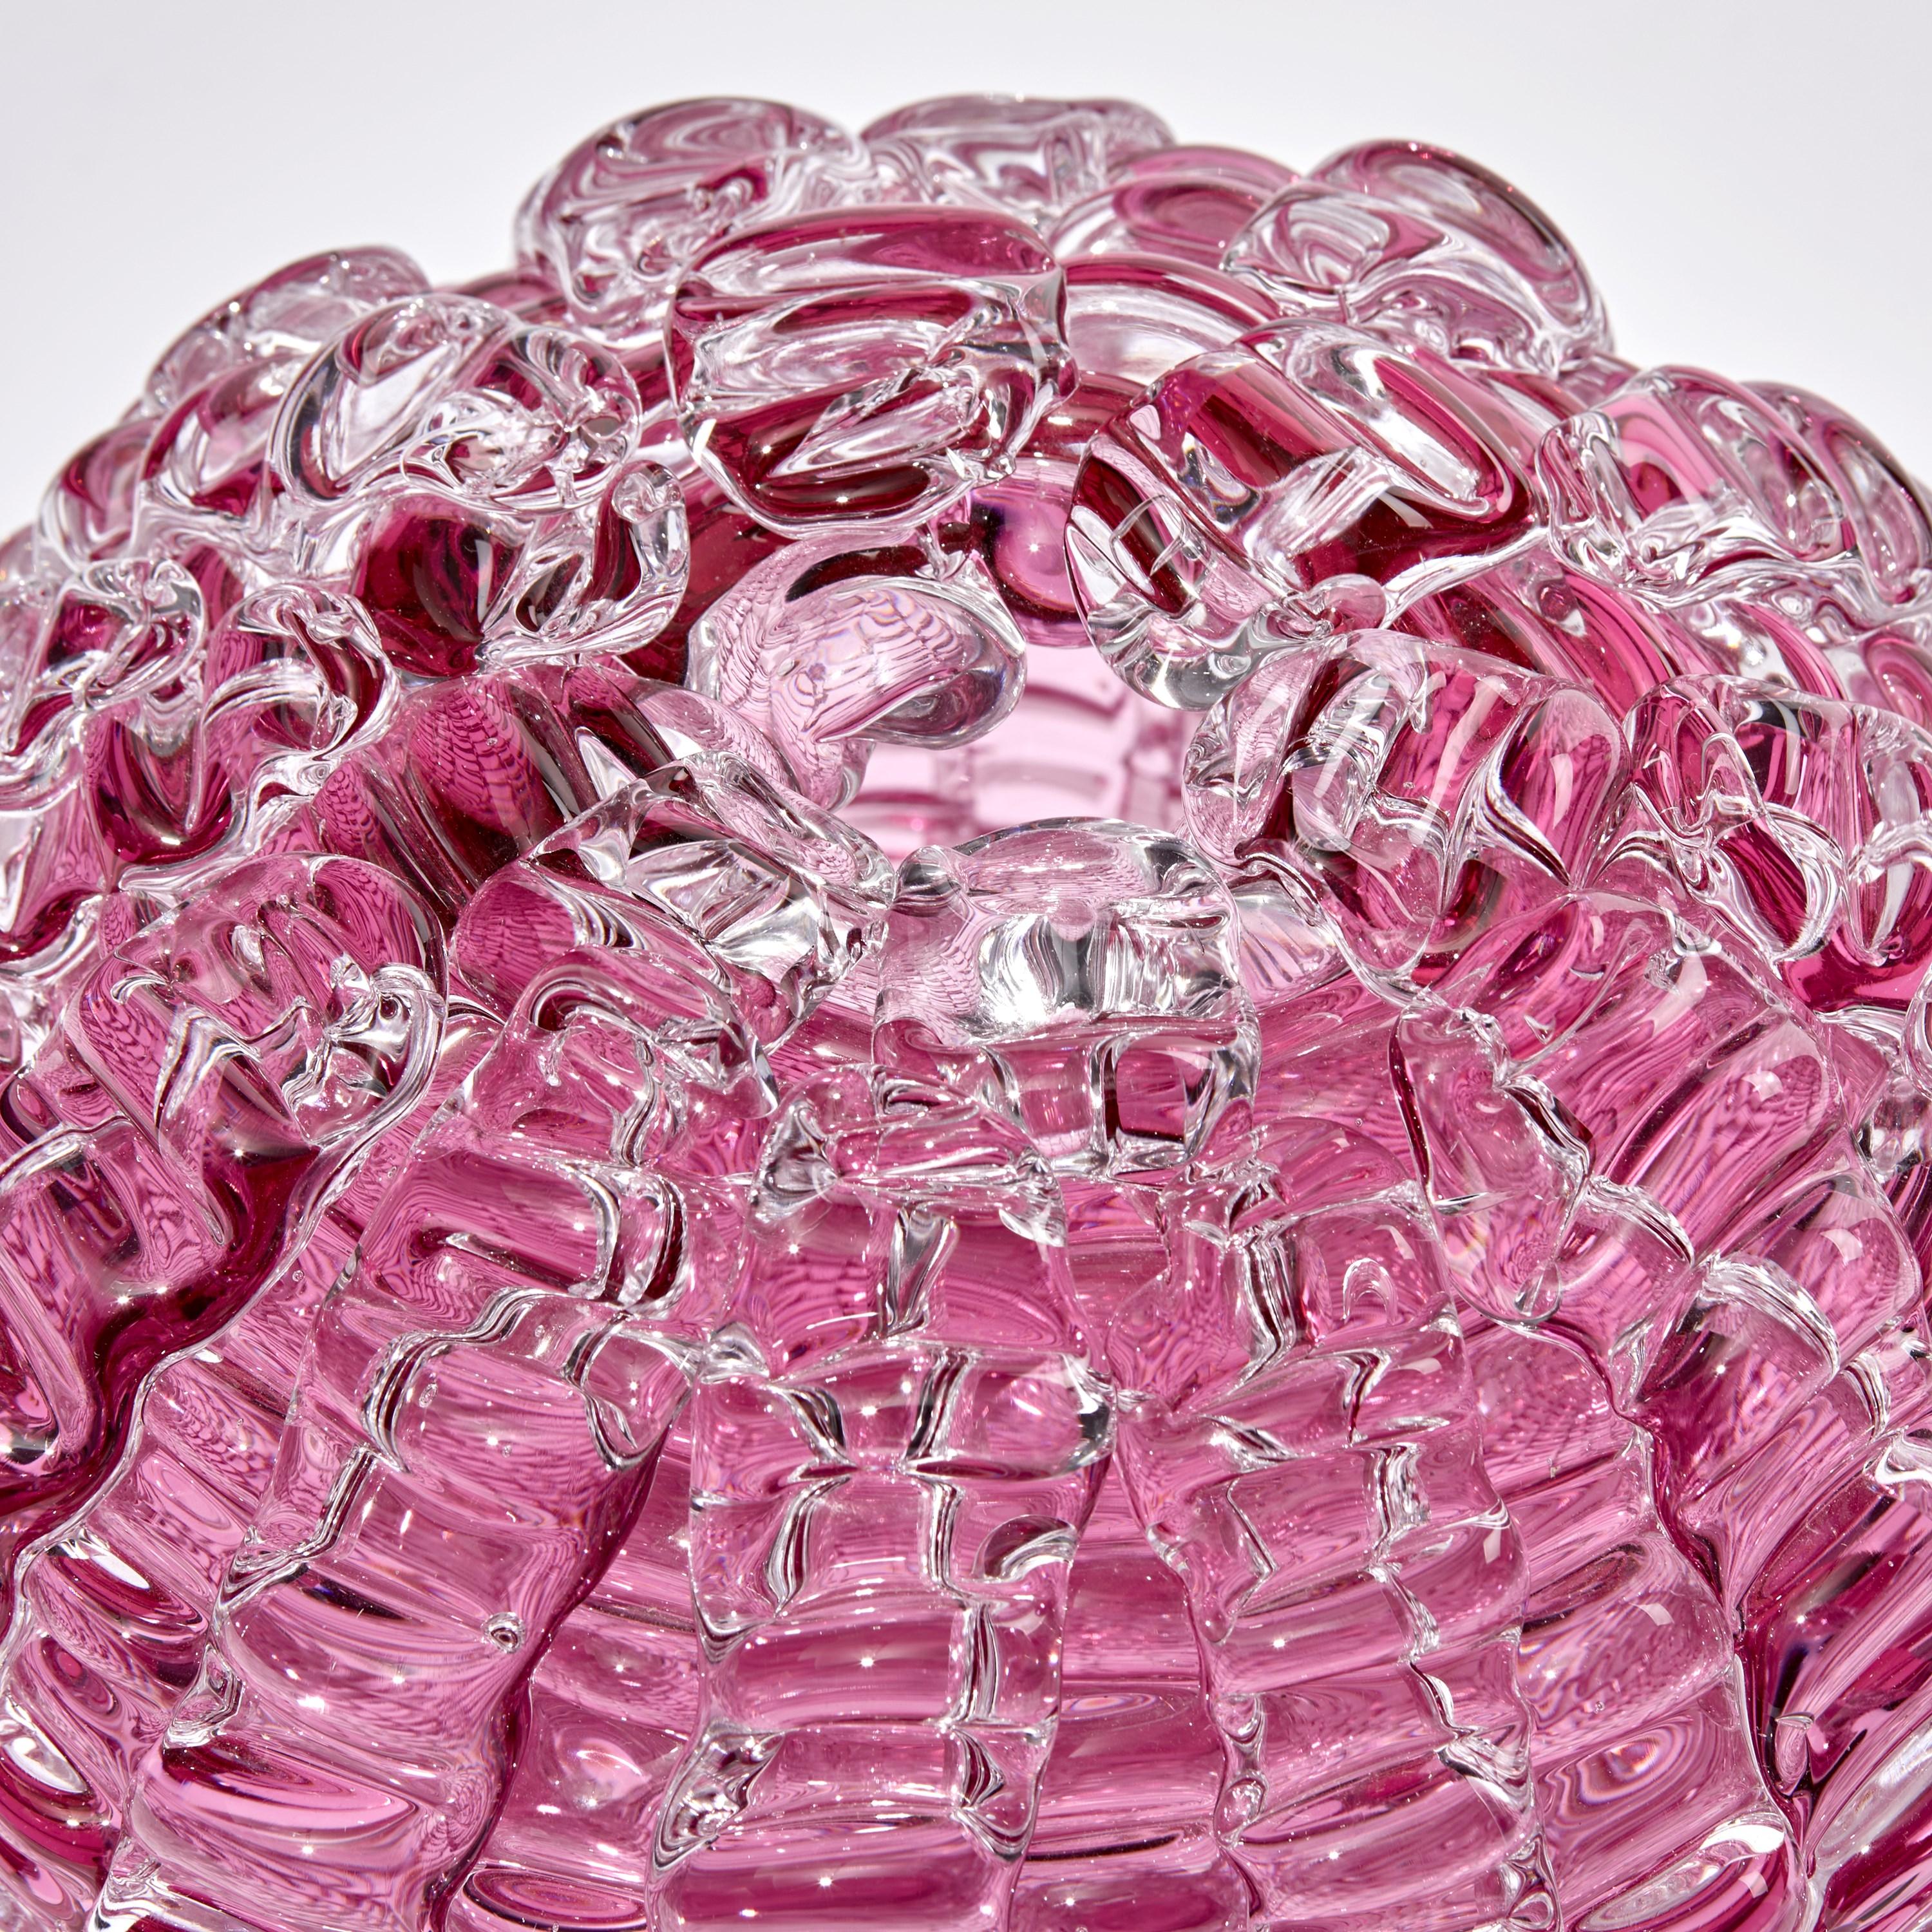 Organic Modern Echinus in Wine Red, a Pink Glass Centrepiece & Sculpture by Katherine Huskie